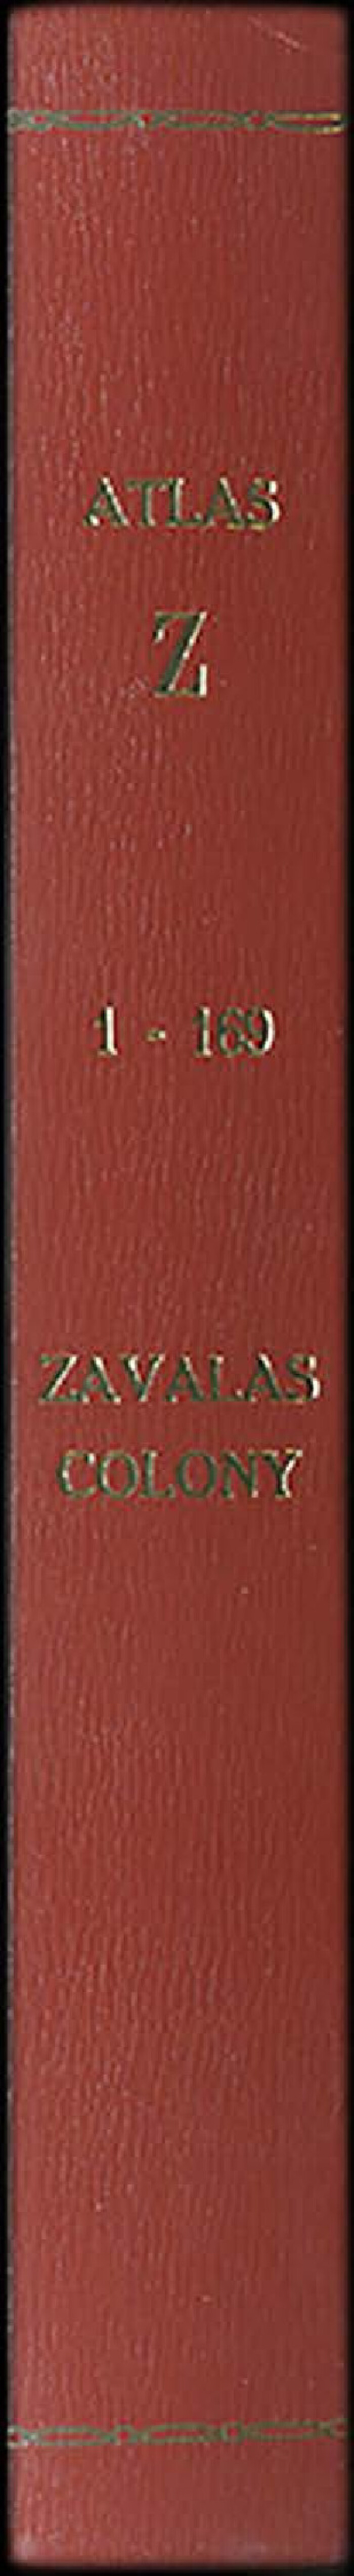 94541, Atlas Z, 1-169: Zavala's Colony, Historical Volumes